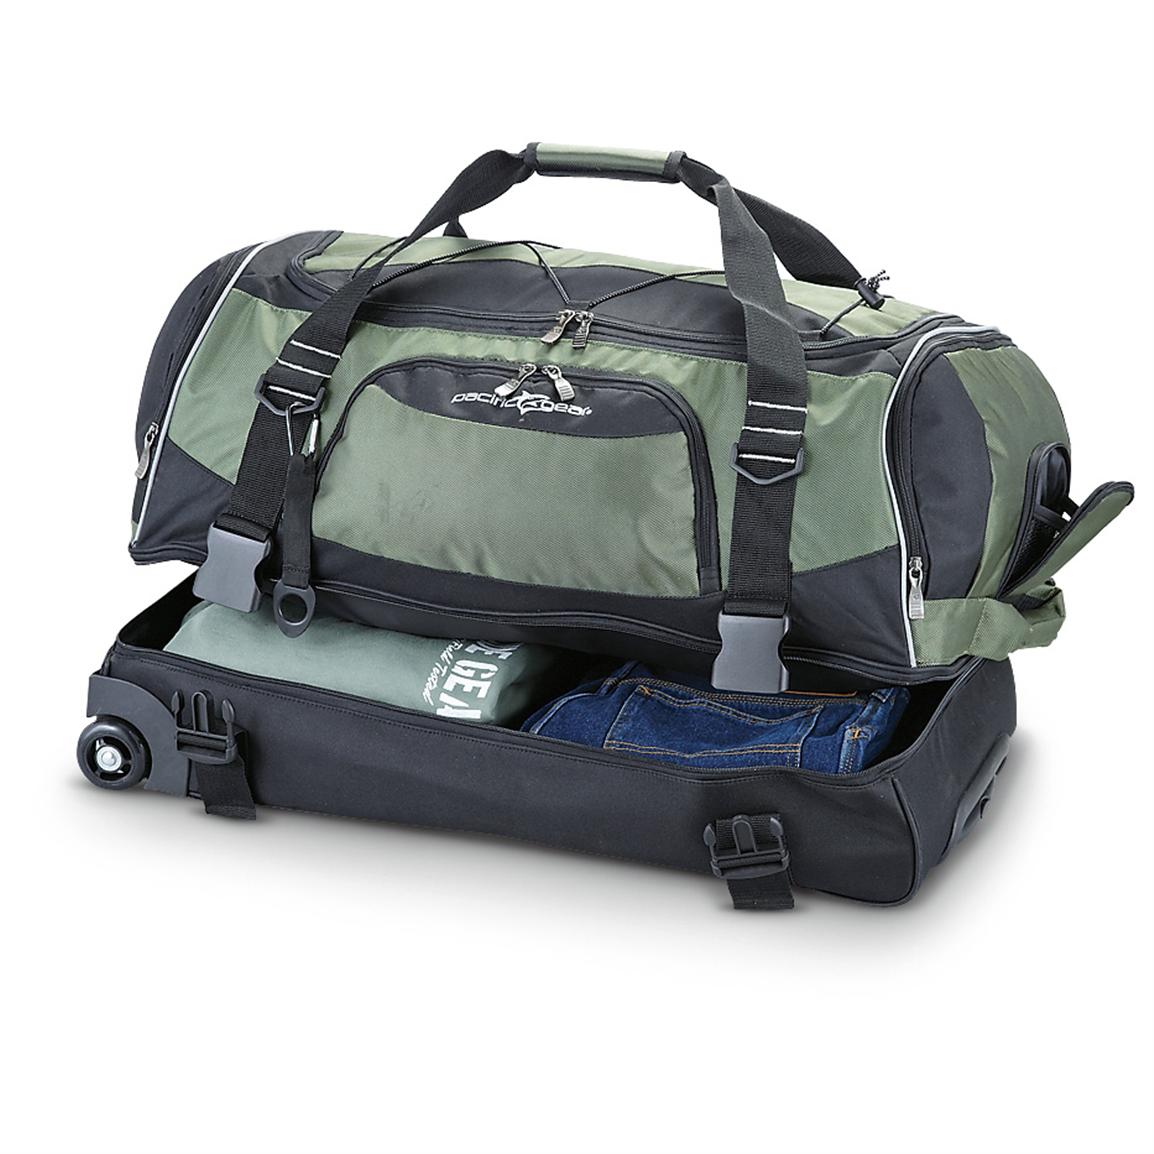 Duffle Bag Luggage With Wheels Best | SEMA Data Co-op